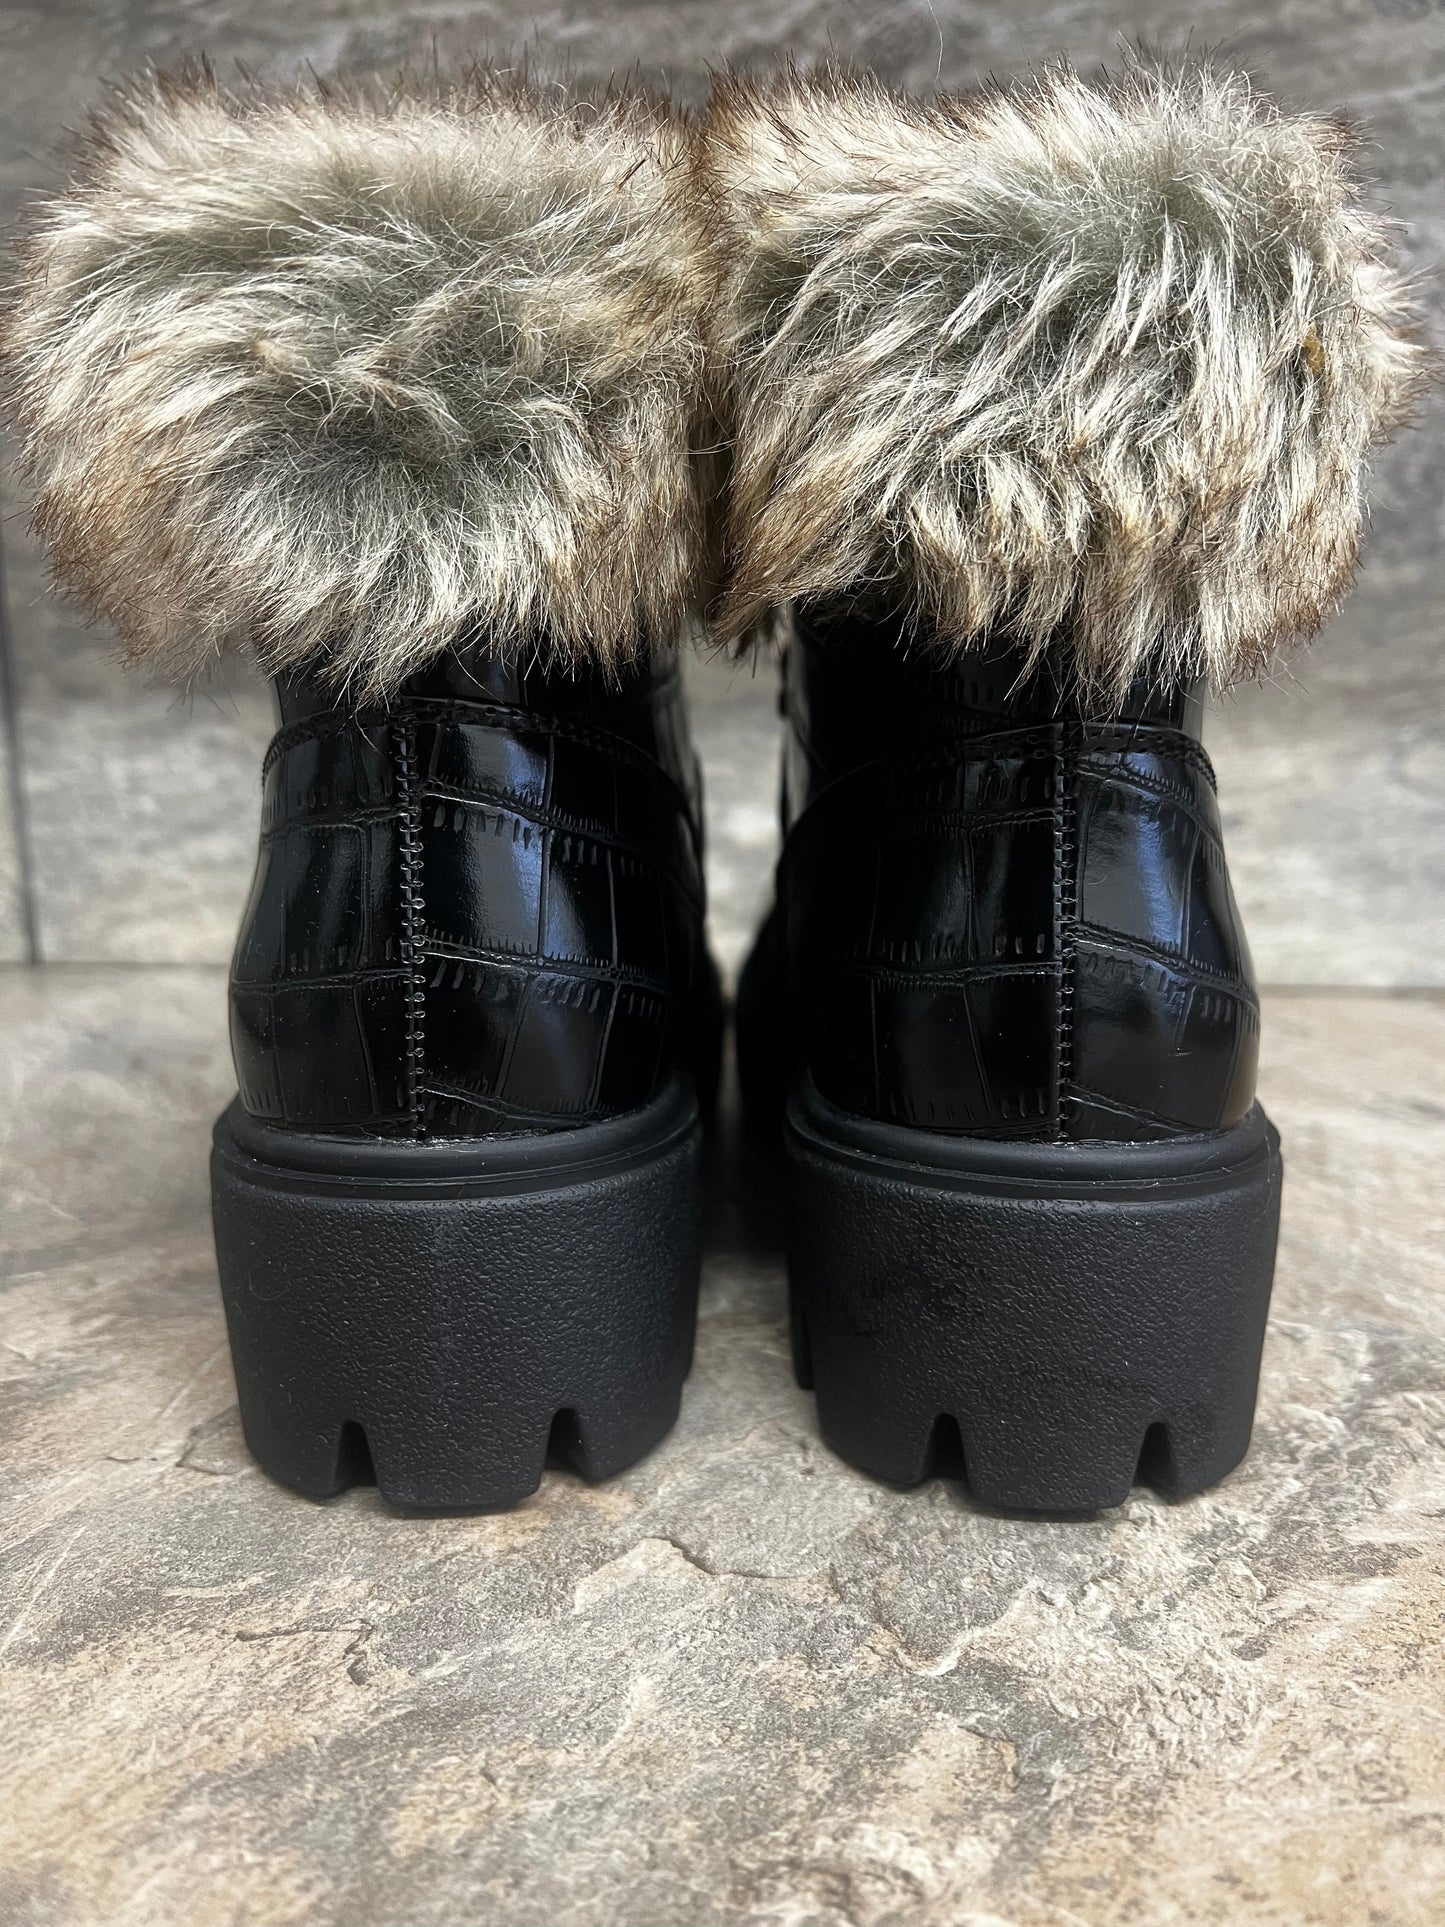 Black croc boot with faux fur sizes 3-8